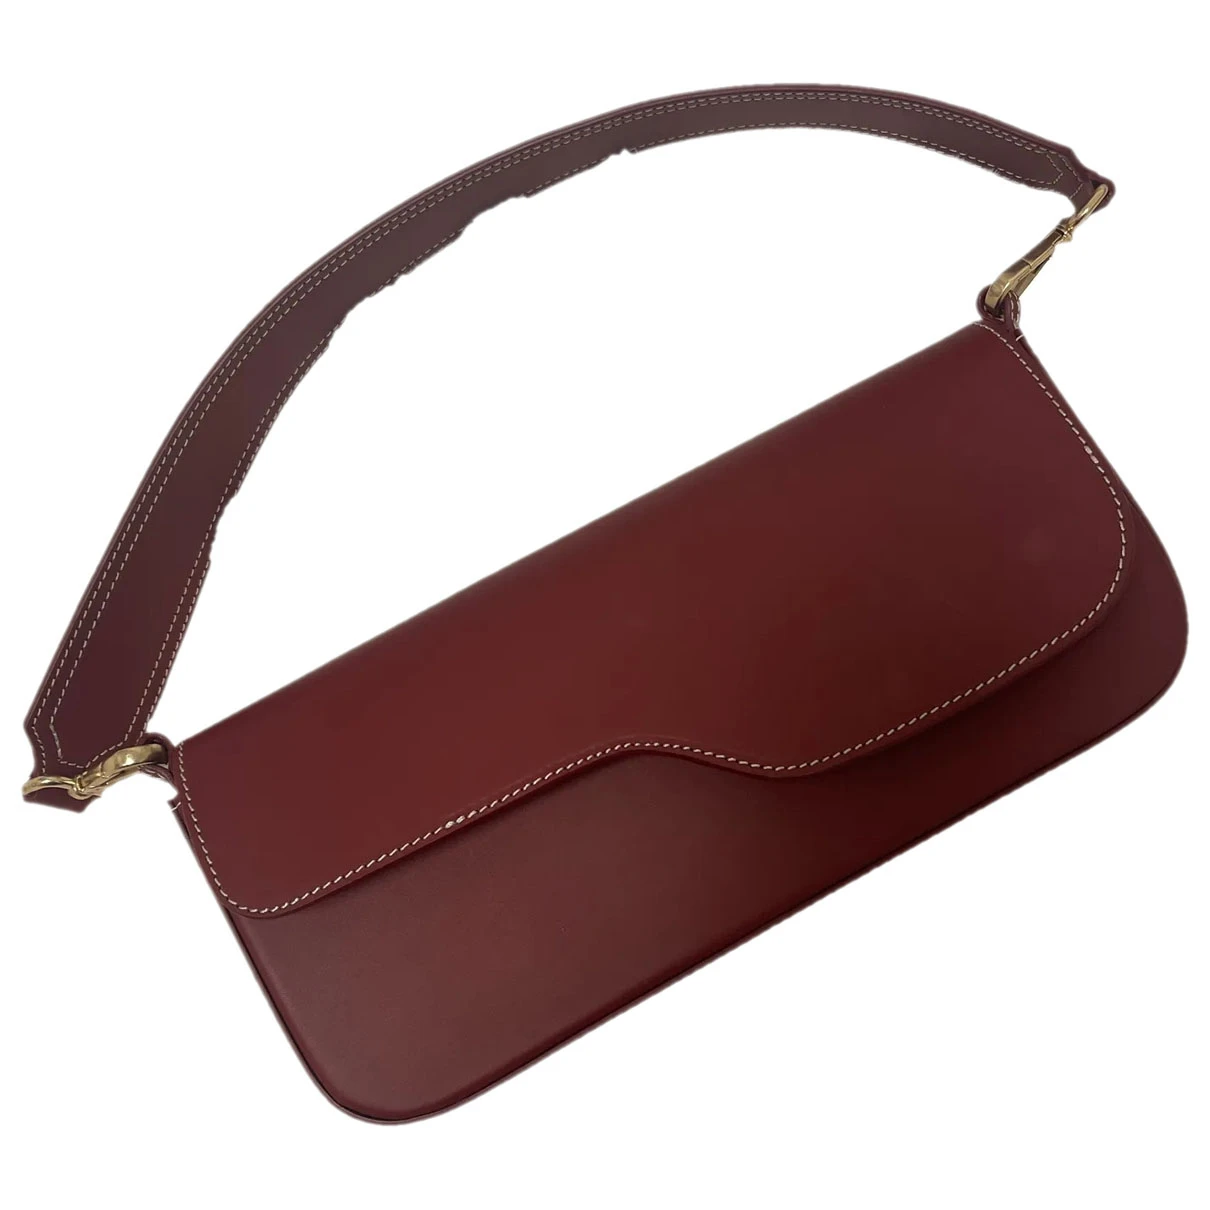 Pre-owned Atp Atelier Leather Handbag In Burgundy